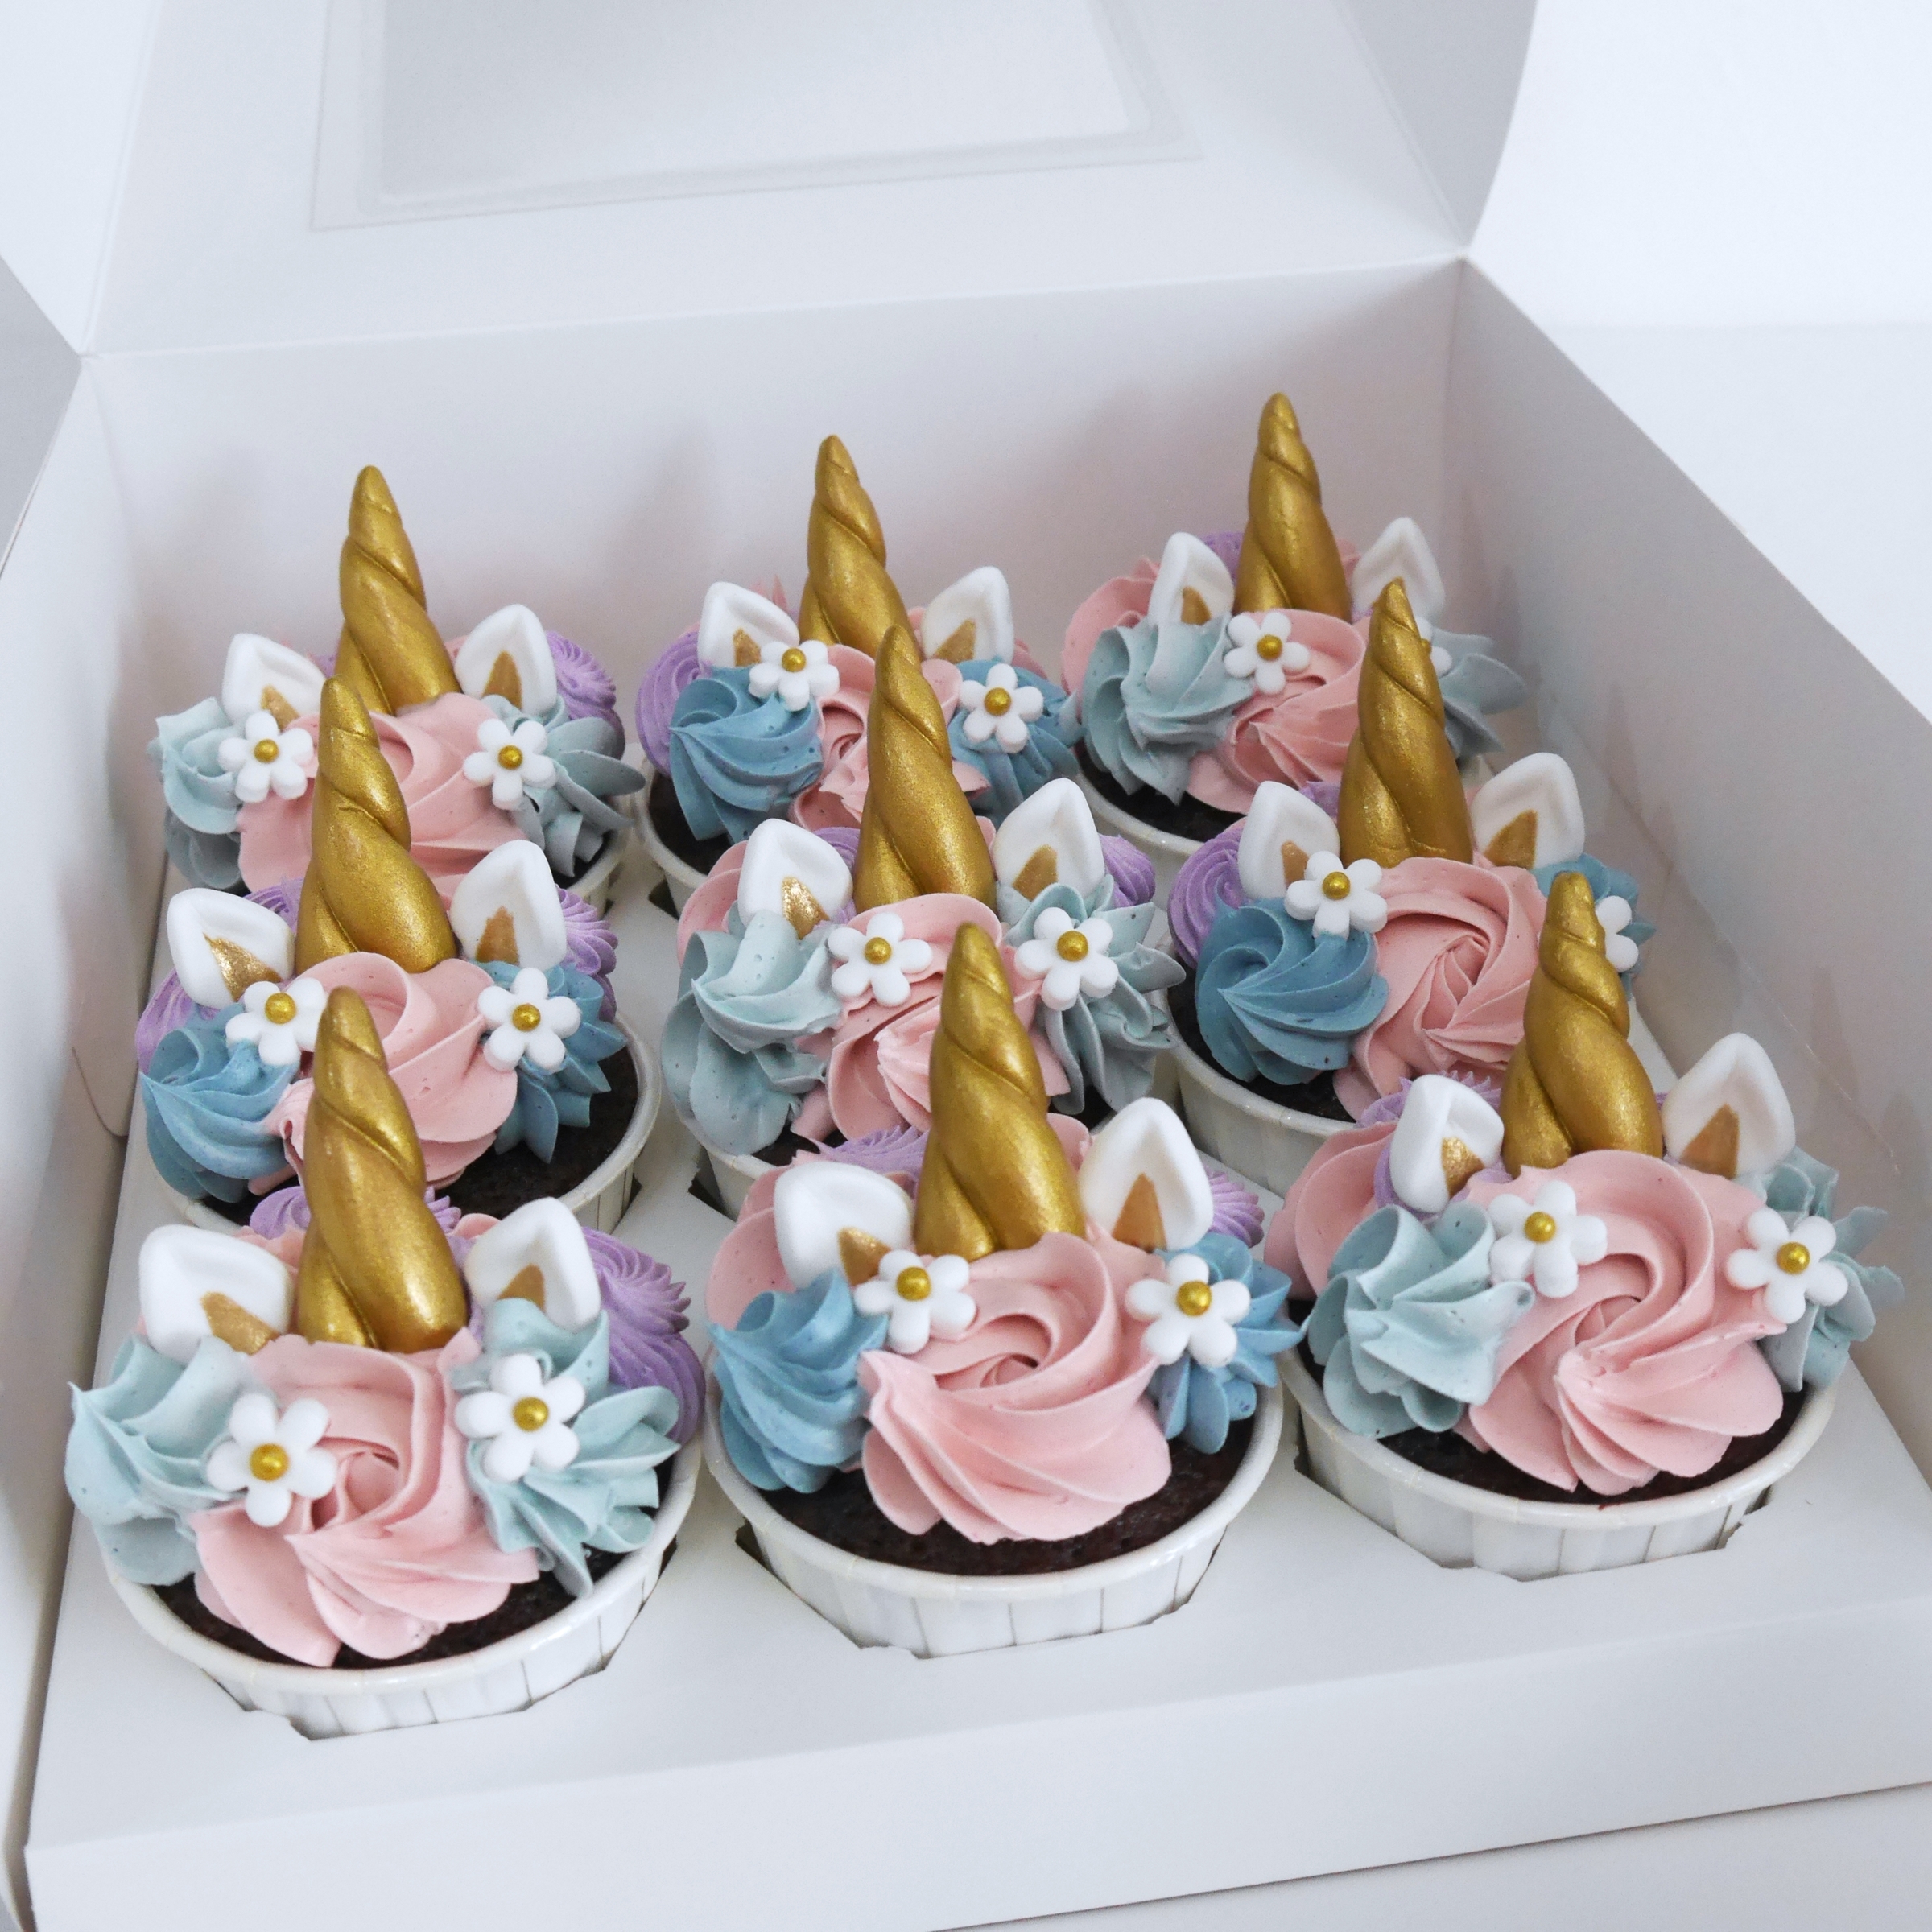 12 Unicorn Party Cake Ideas